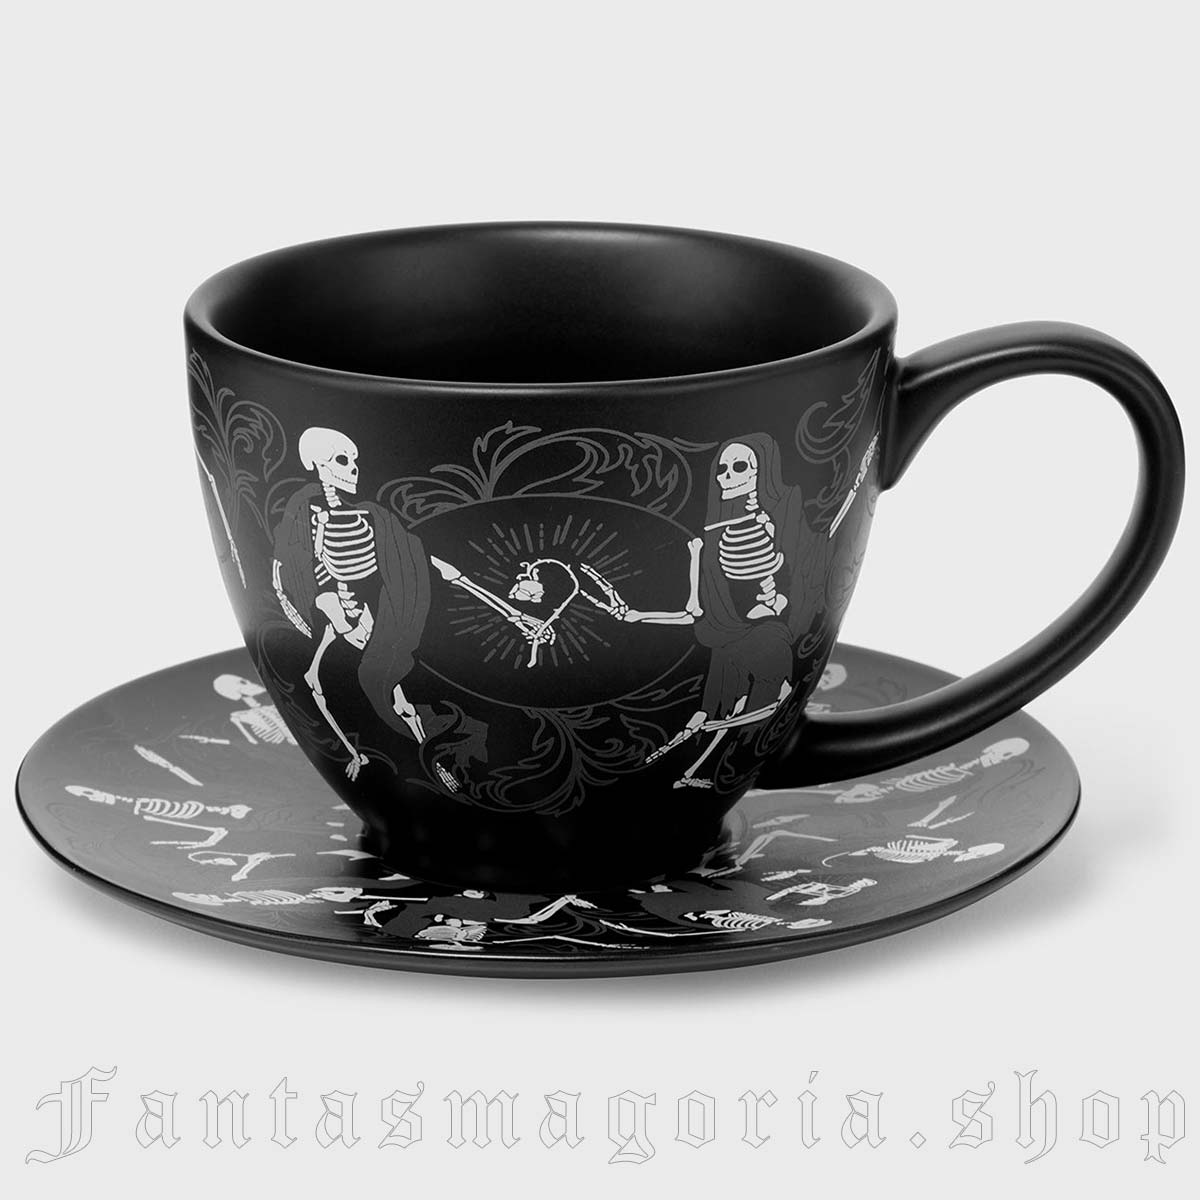 https://fantasmagoria.shop/99219/danse-macabre-teacup-and-saucer.jpg